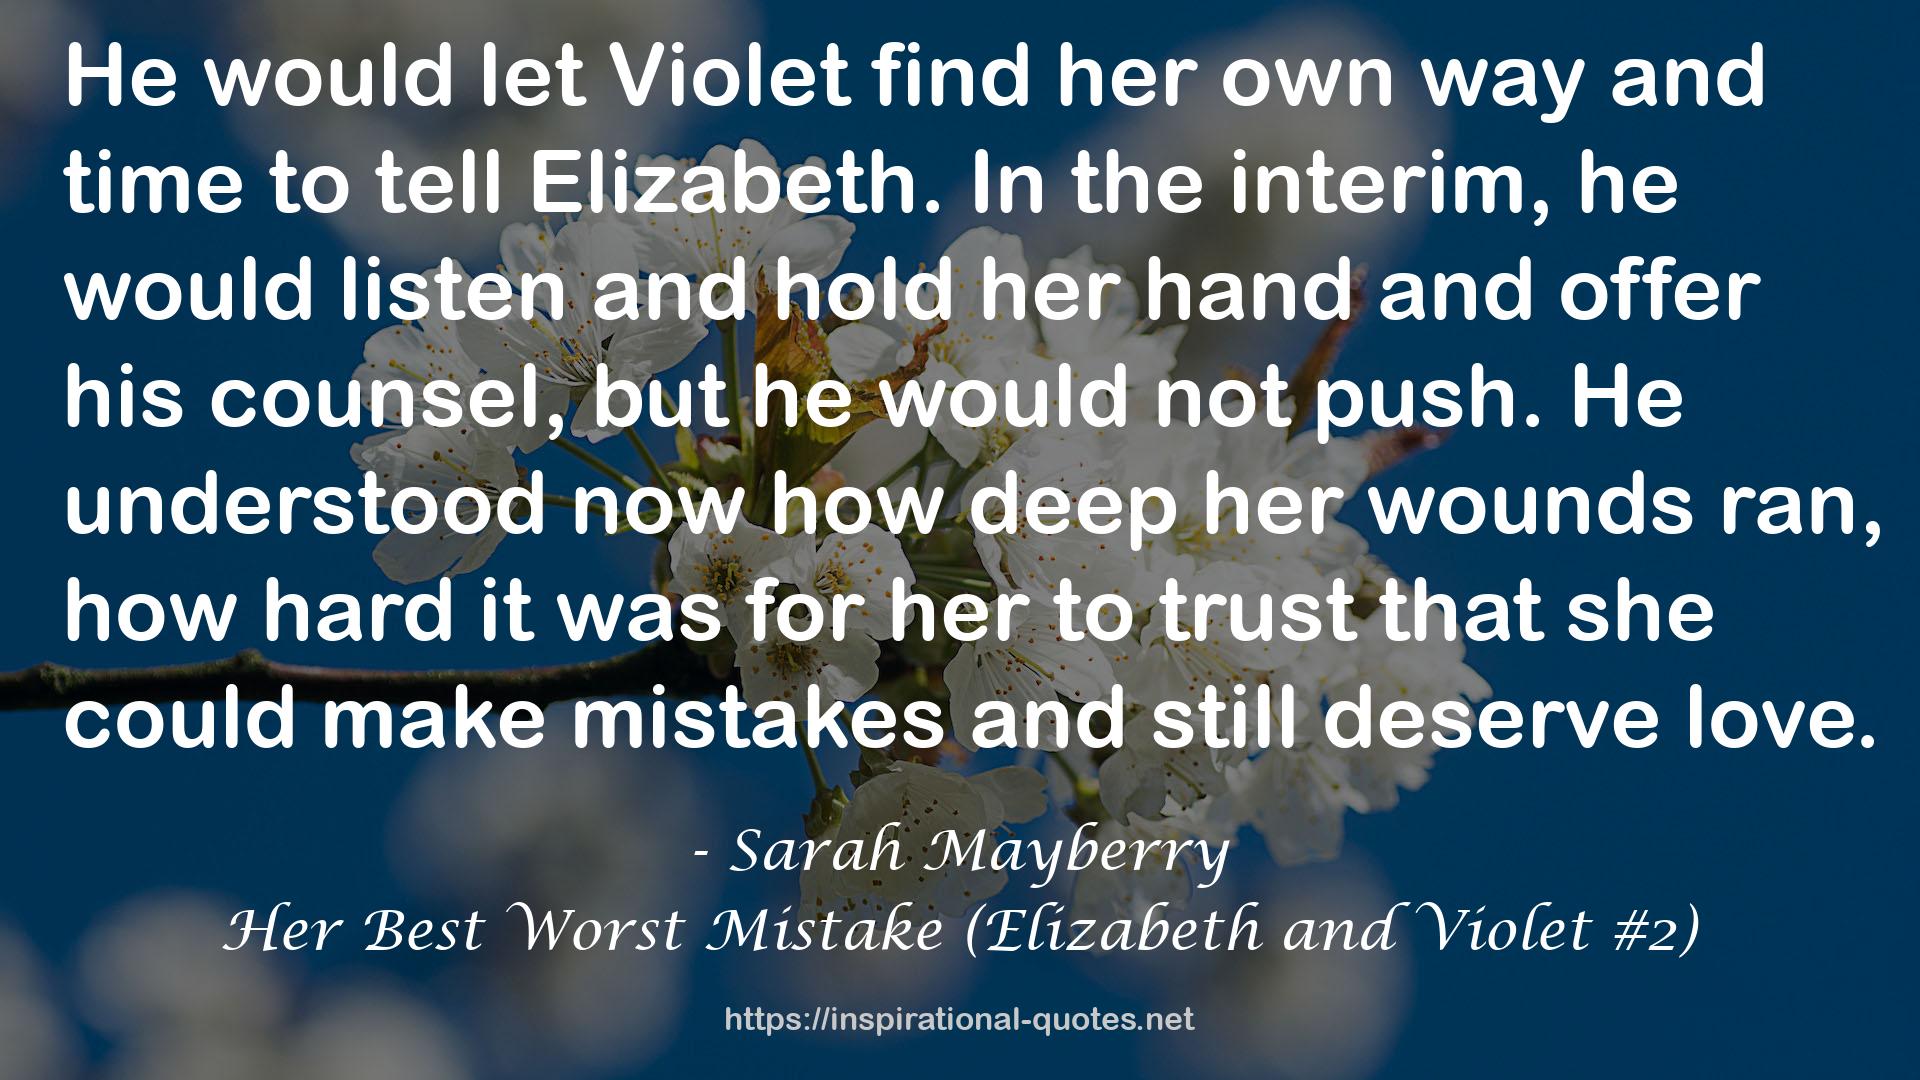 Her Best Worst Mistake (Elizabeth and Violet #2) QUOTES